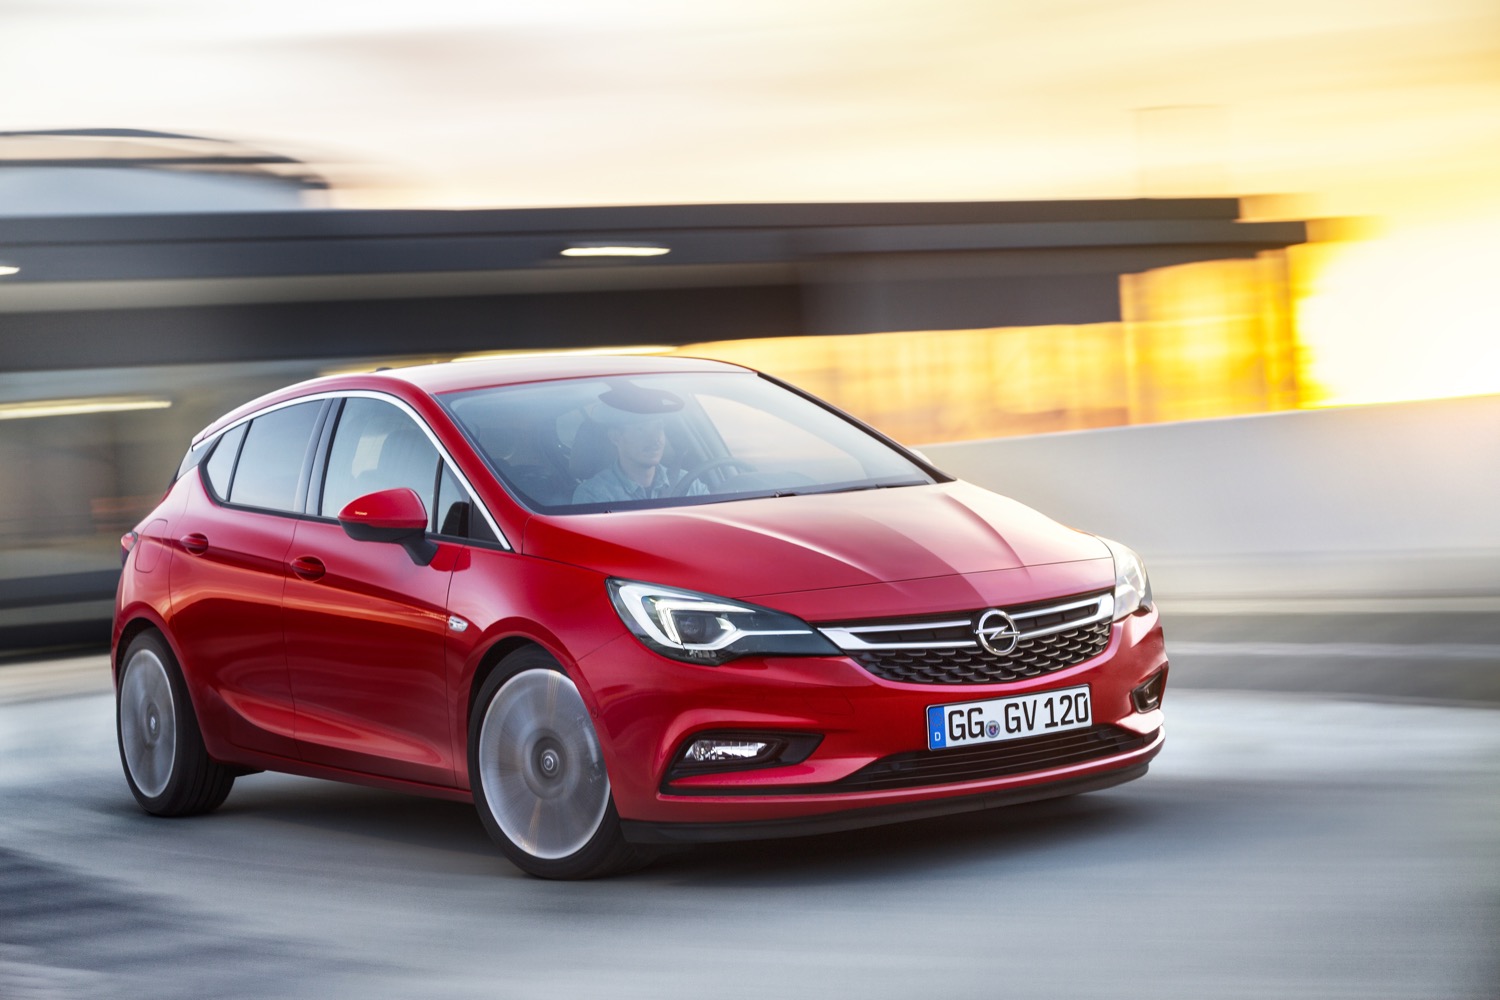 2016 Opel Astra K Sedan Rendered: Lighter and More Stylish - autoevolution